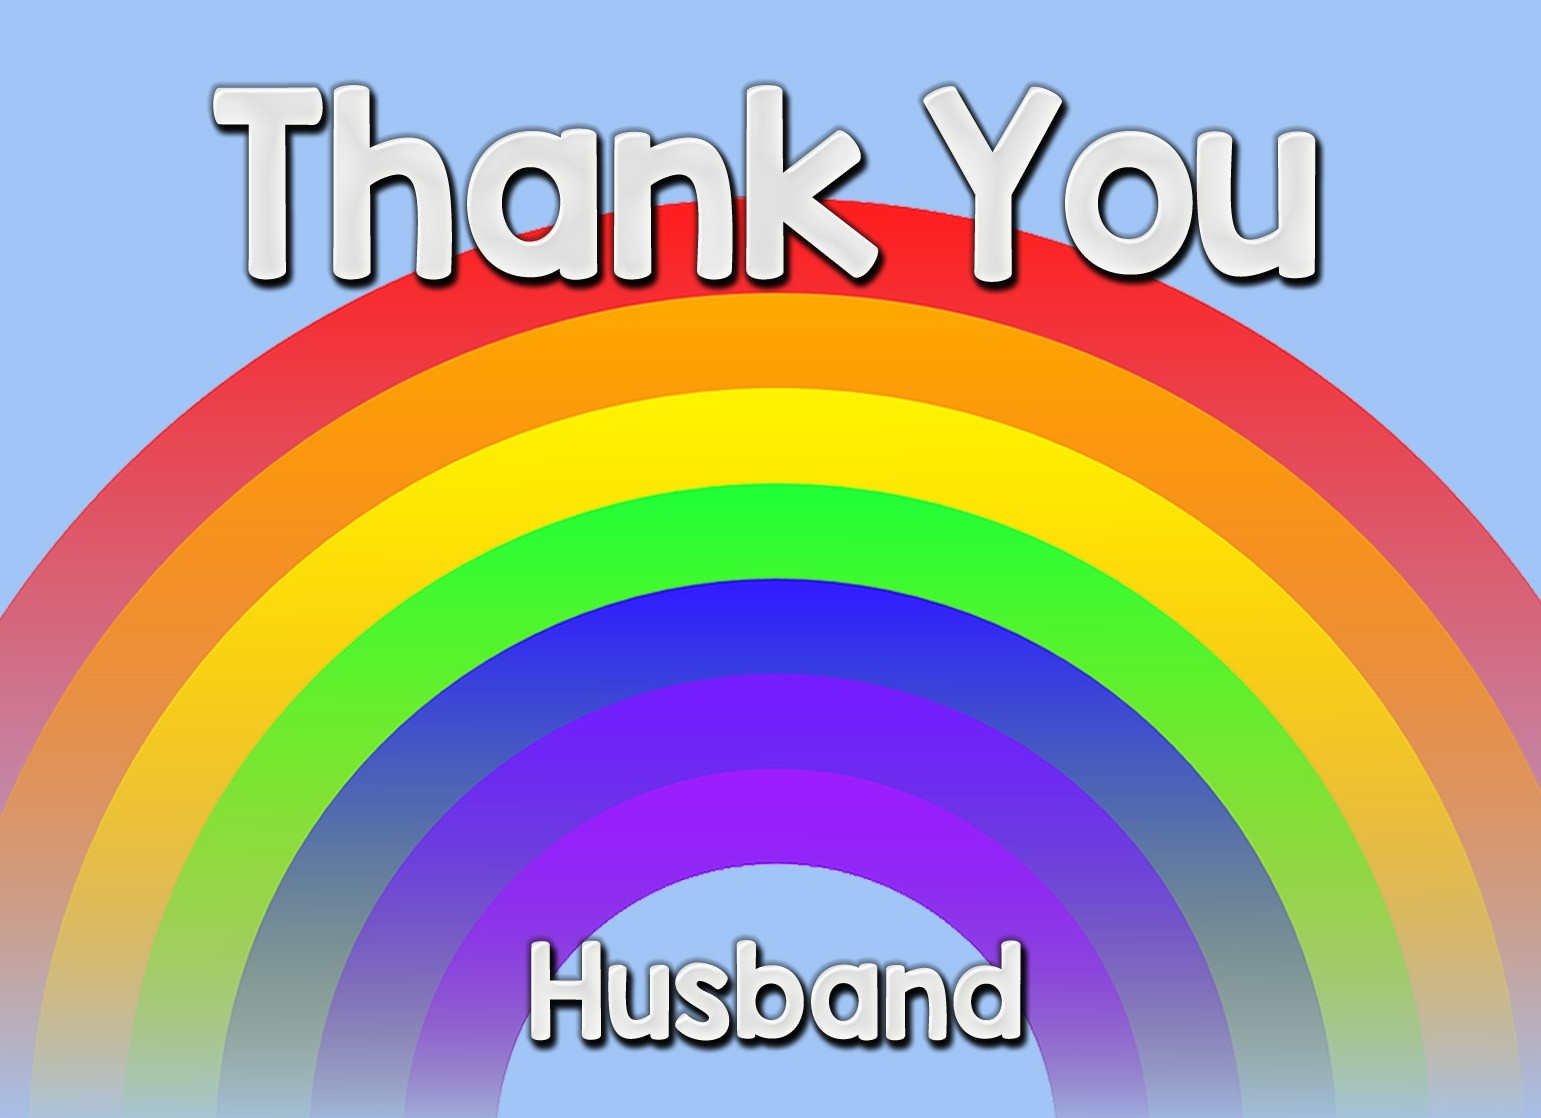 Thank You 'Husband' Rainbow Greeting Card